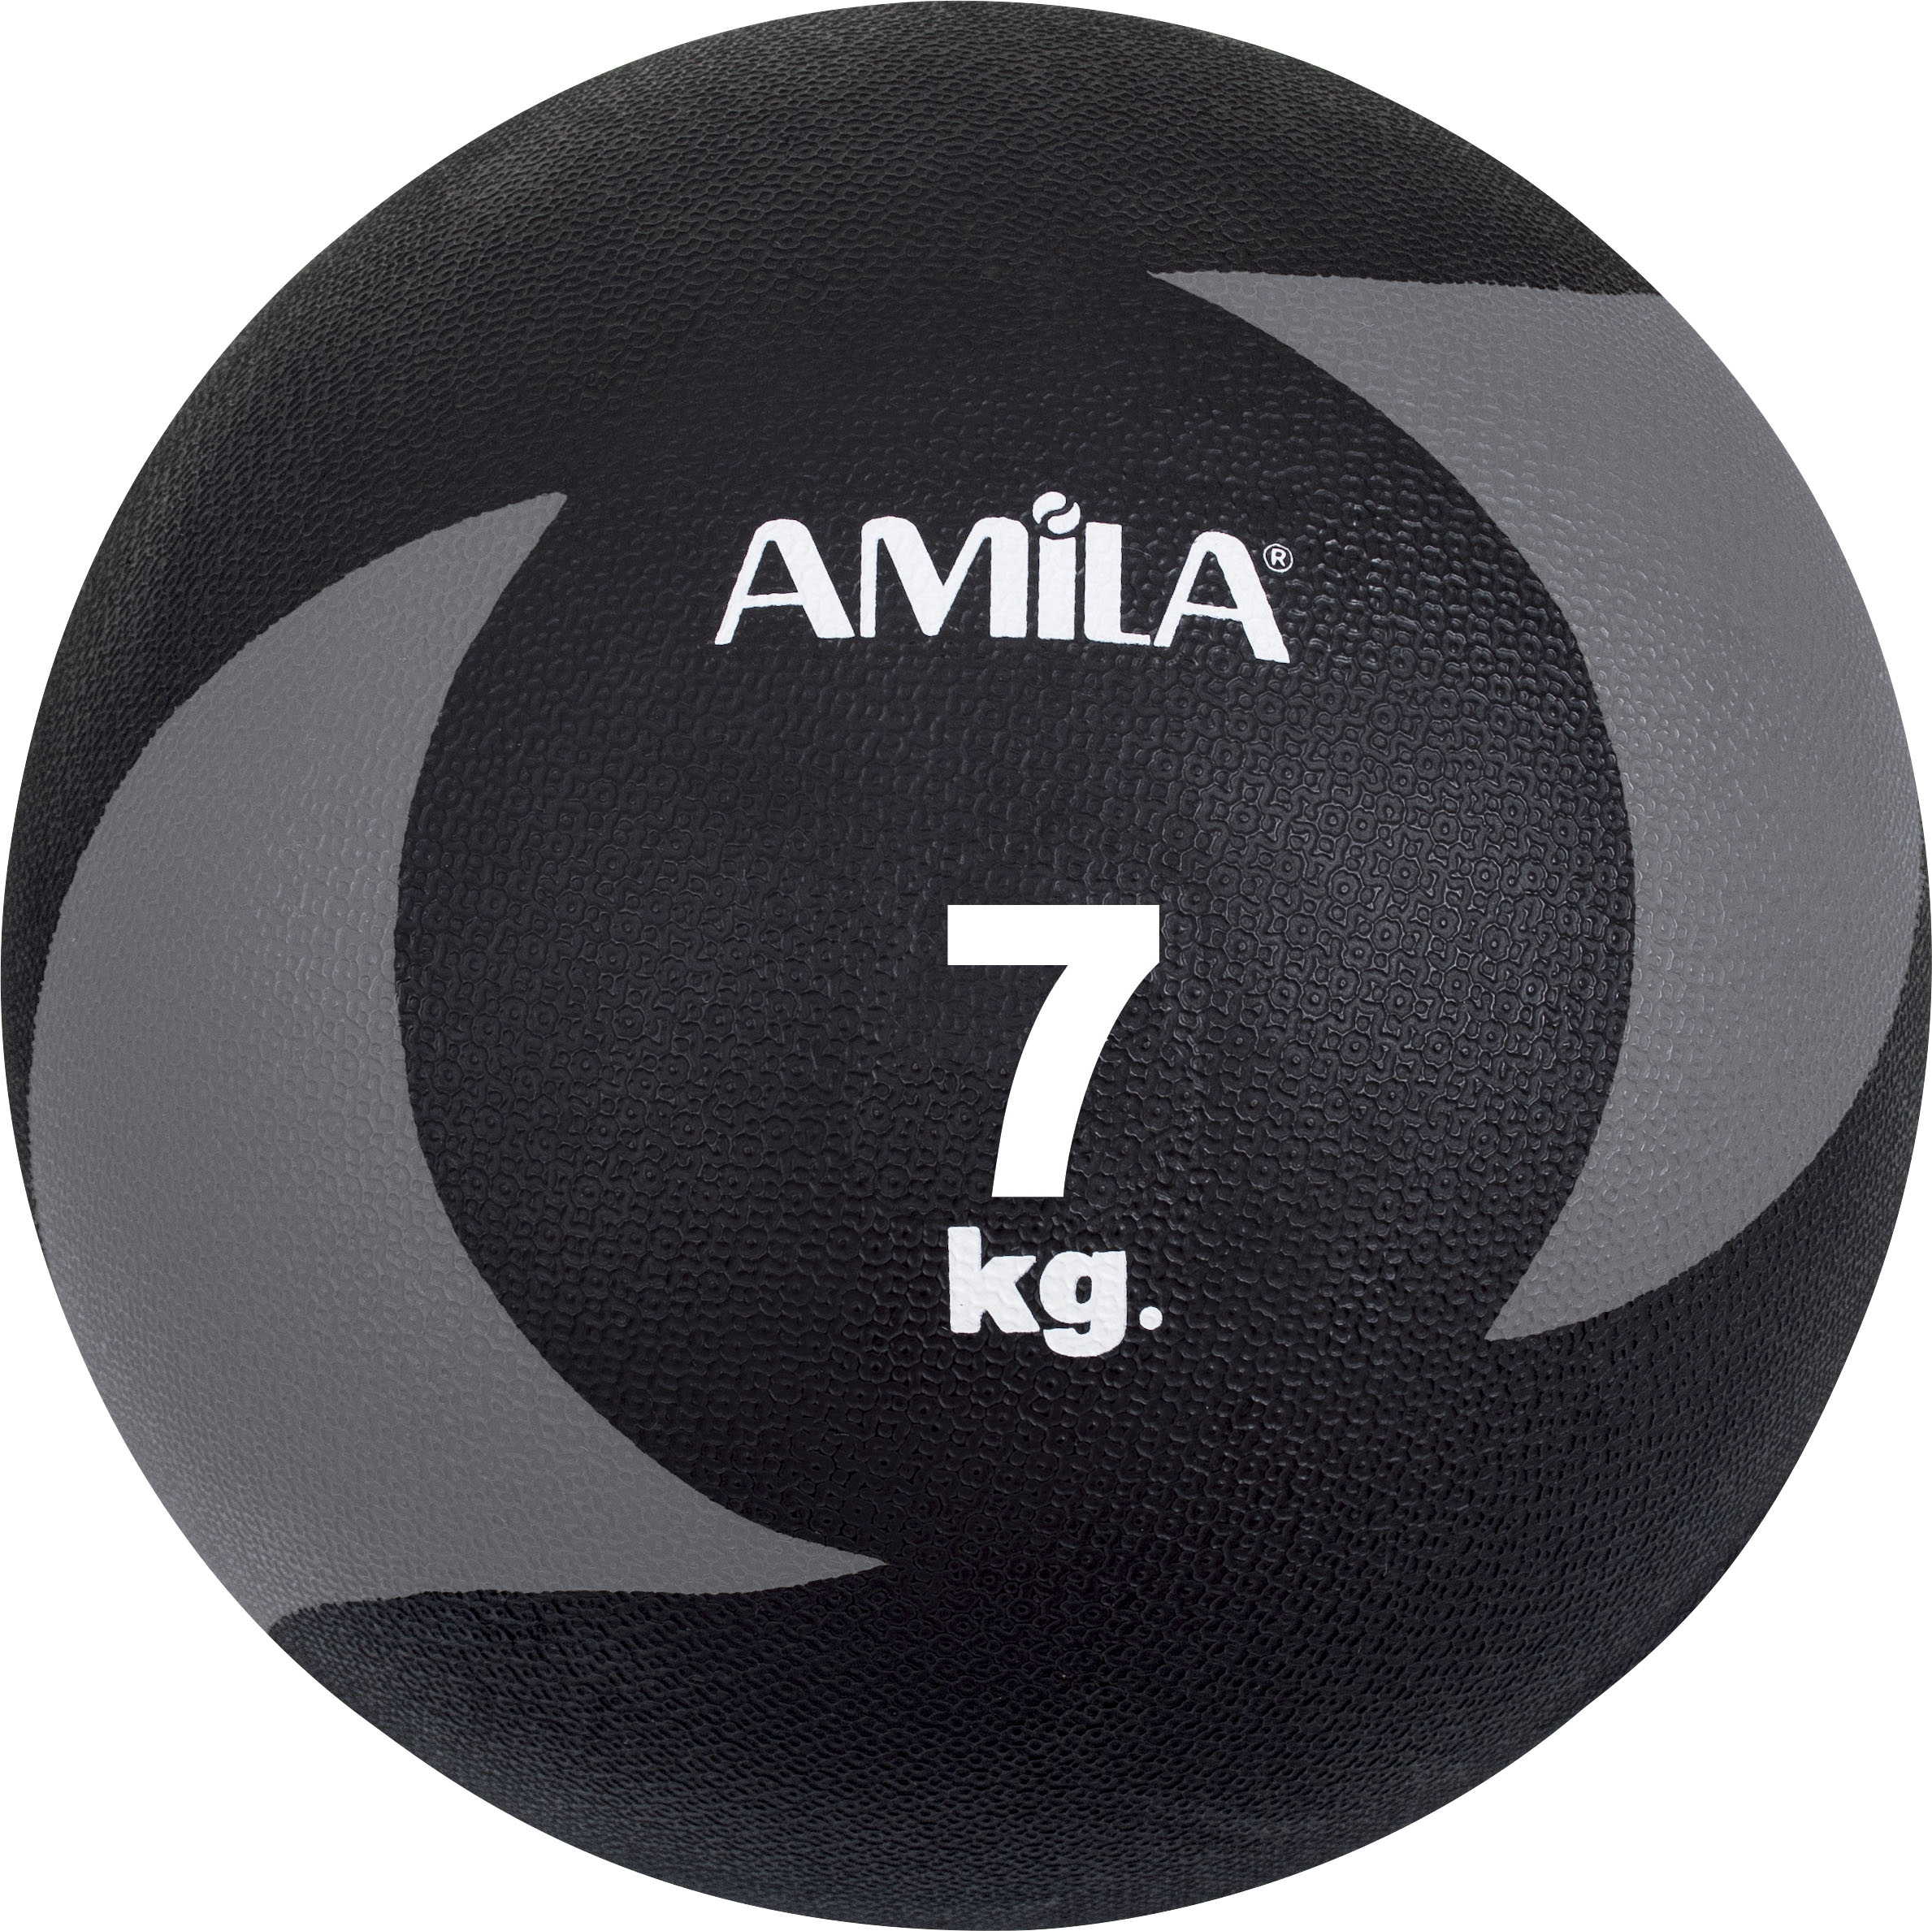 Amila Μπαλα Medicine 7Kgr - 100% Α Ποιοτ. Λαστιχο. Soft. Rebound (44634)